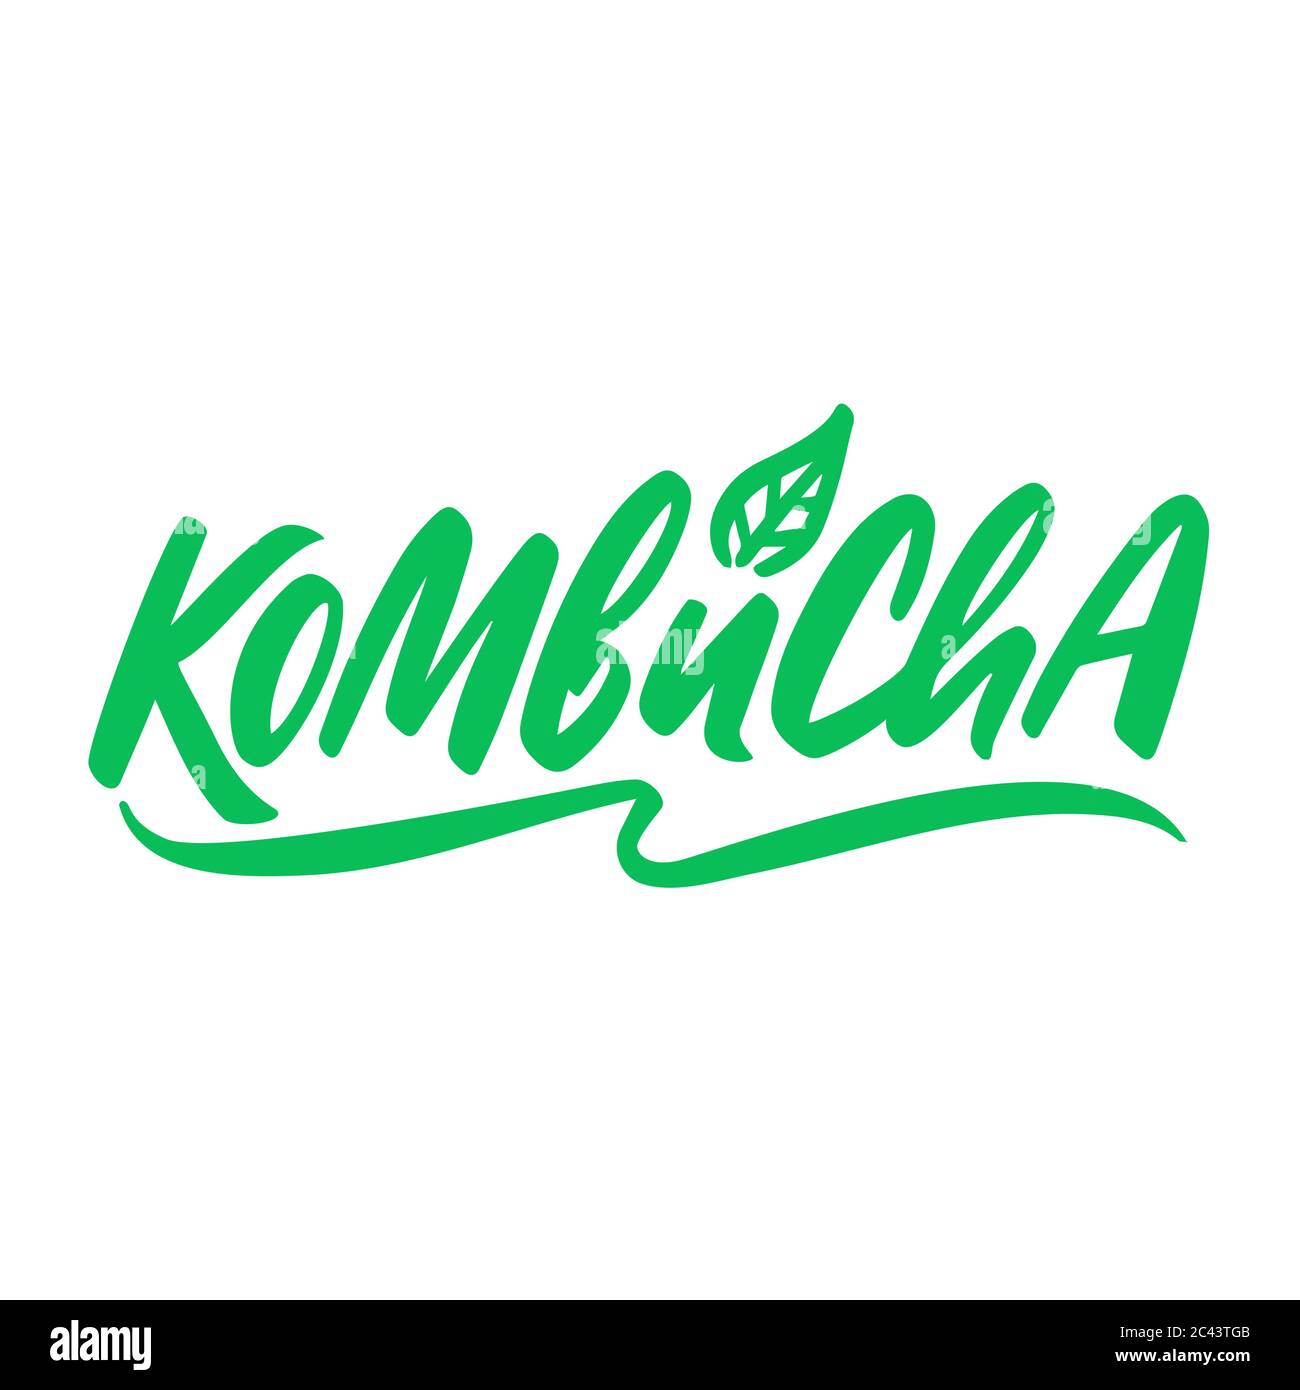 Kombucha hand written vector logo. Kombucha healthy fermented probiotic tea Stock Vector